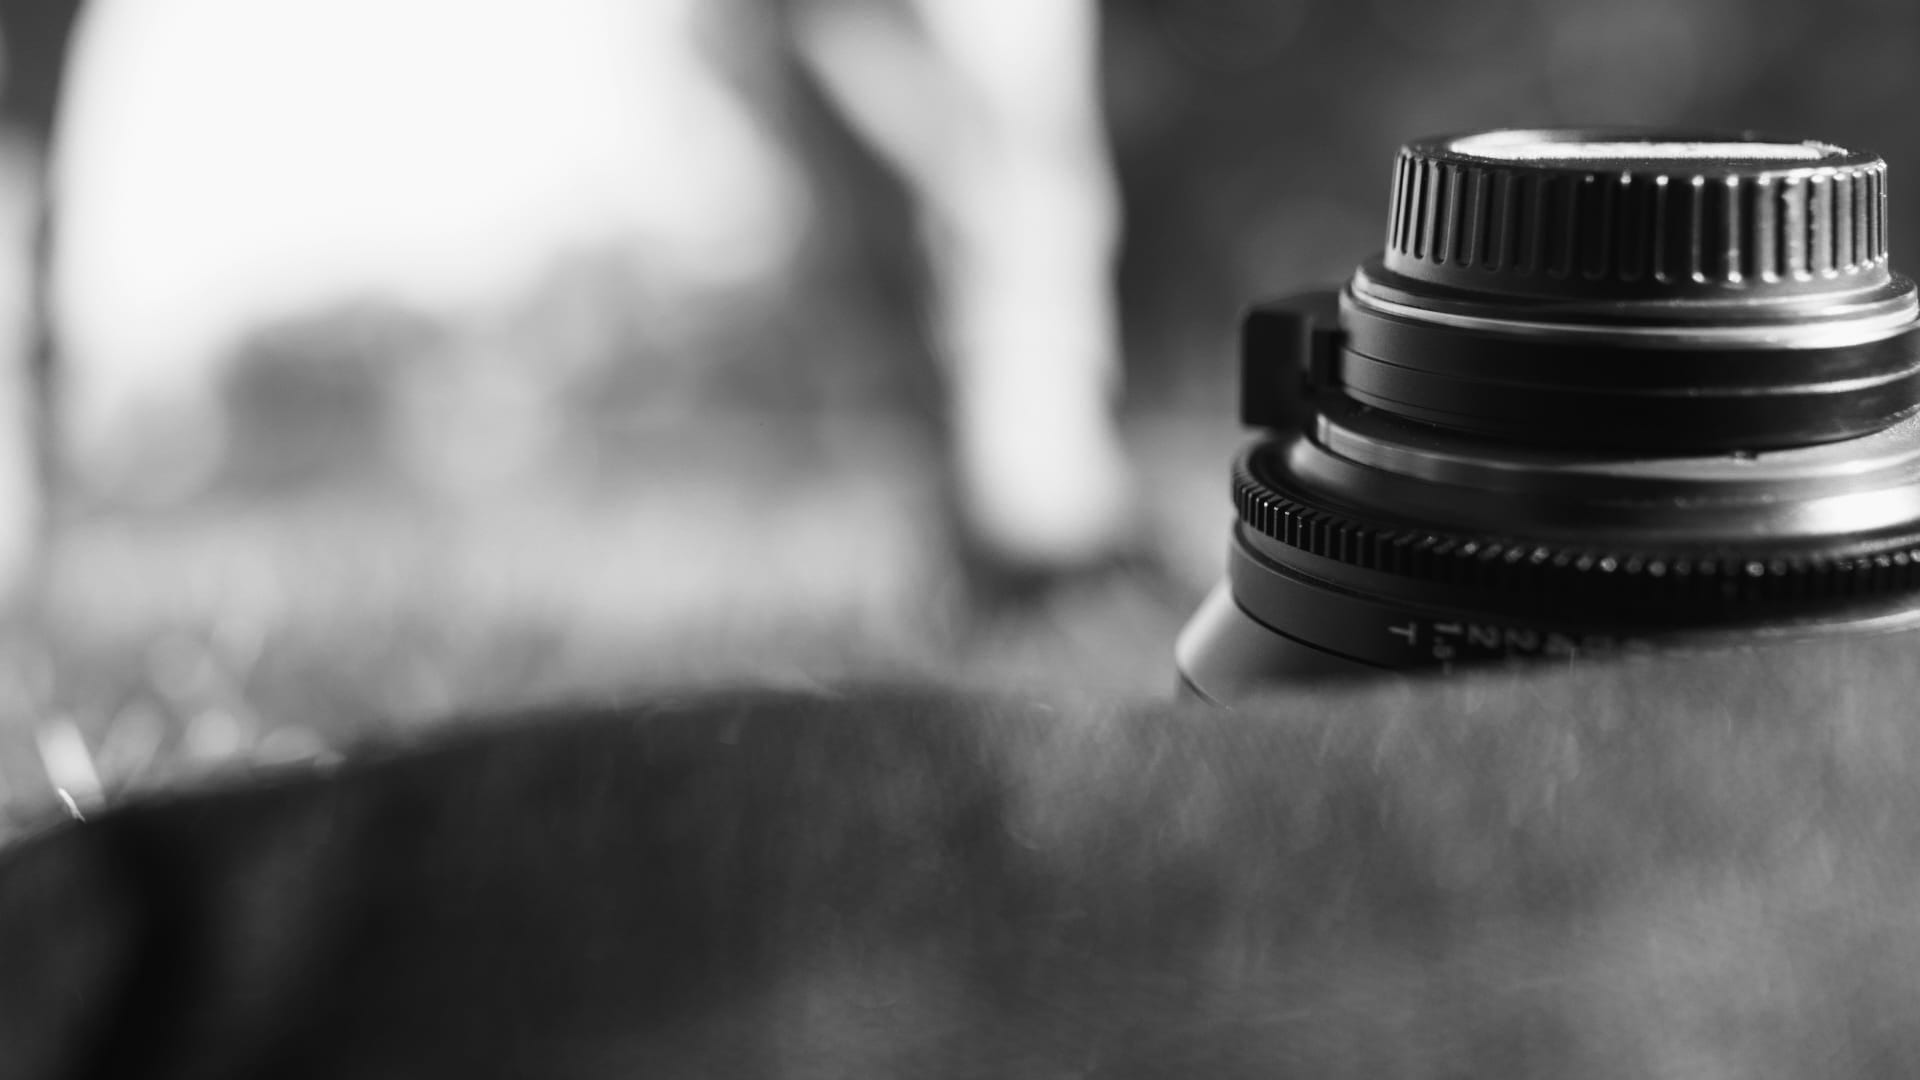 SHD Black and white closeup of camera lens